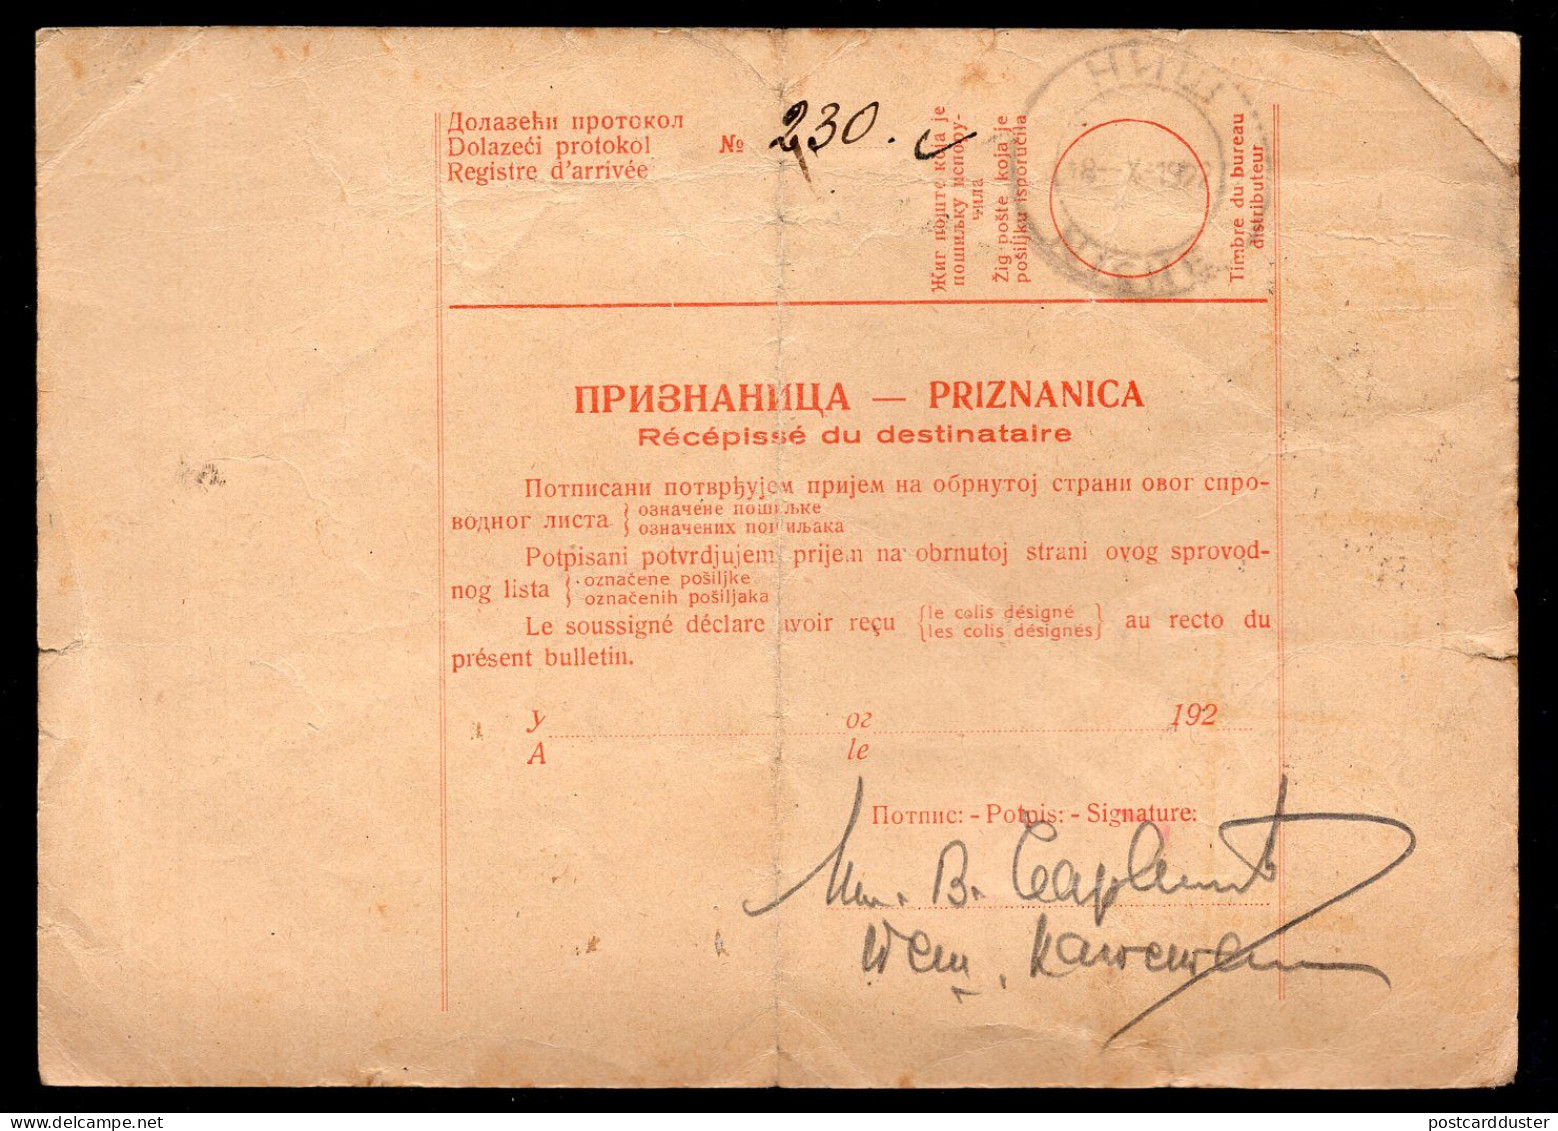 YUGOSLAVIA SHS Beograd Serbia 1922 Postal Parcel Card (p628) - Briefe U. Dokumente